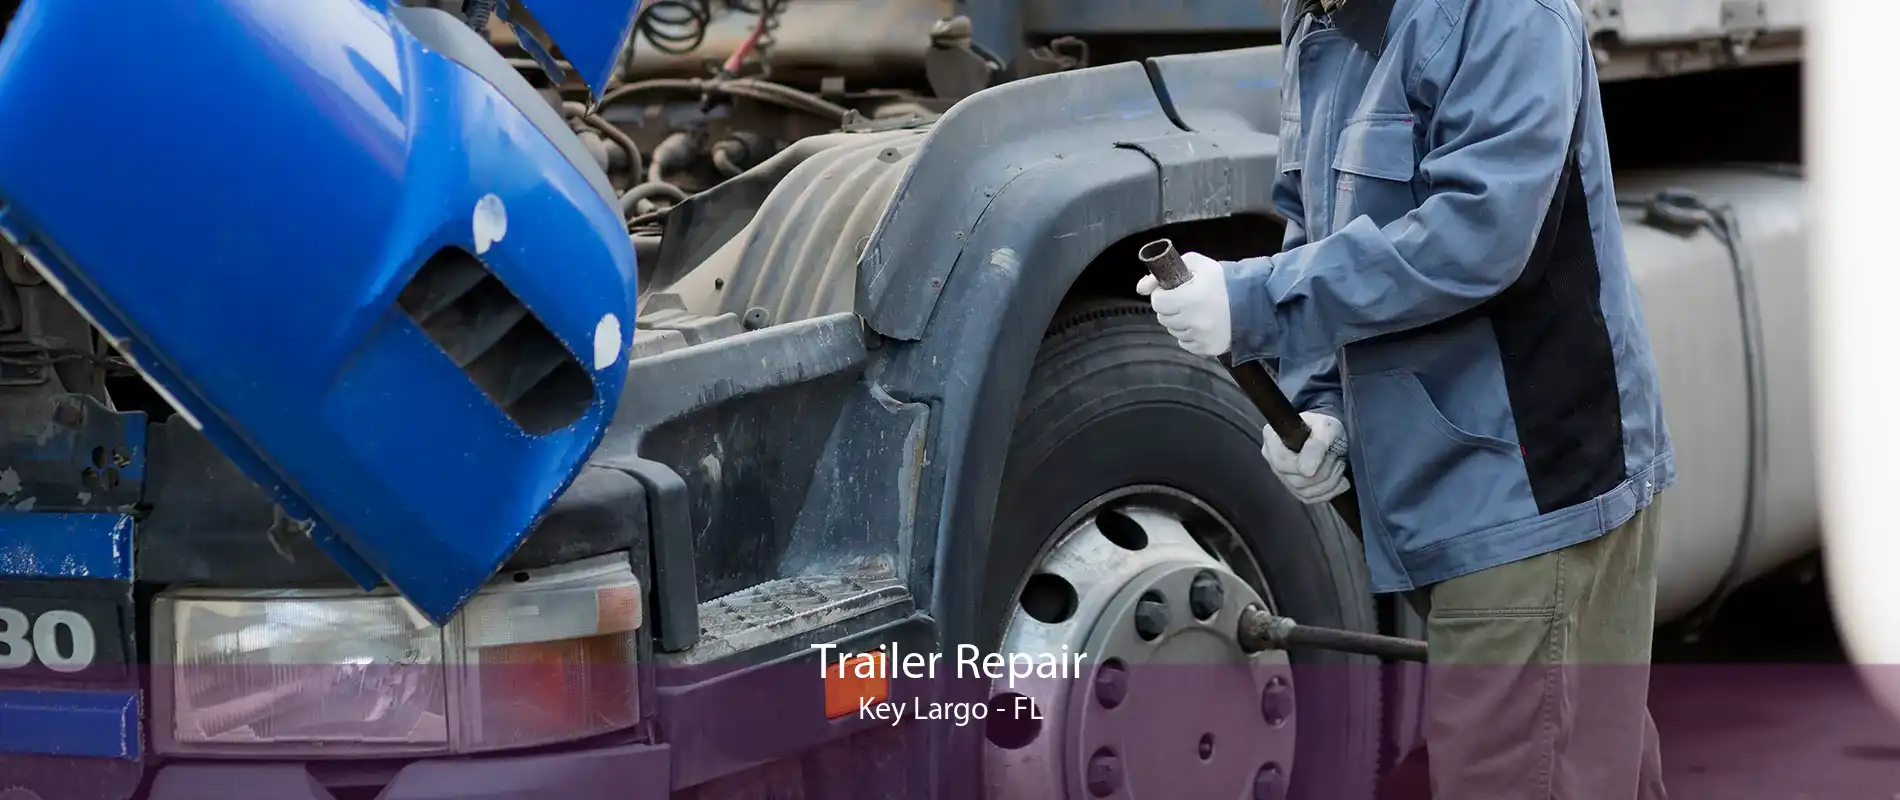 Trailer Repair Key Largo - FL